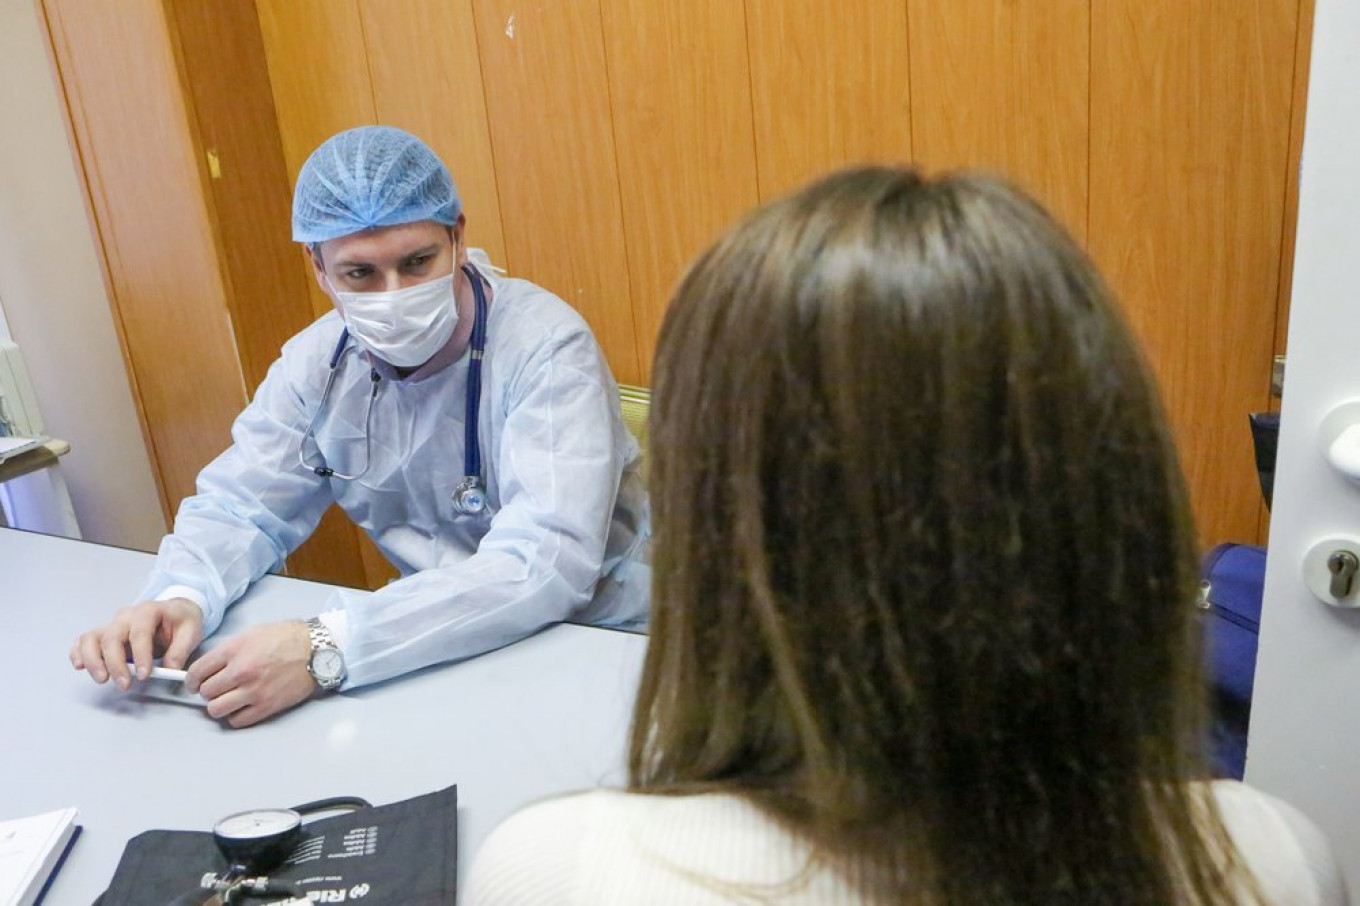 Moscow Deploys Facial Recognition in Mass Coronavirus Quarantine